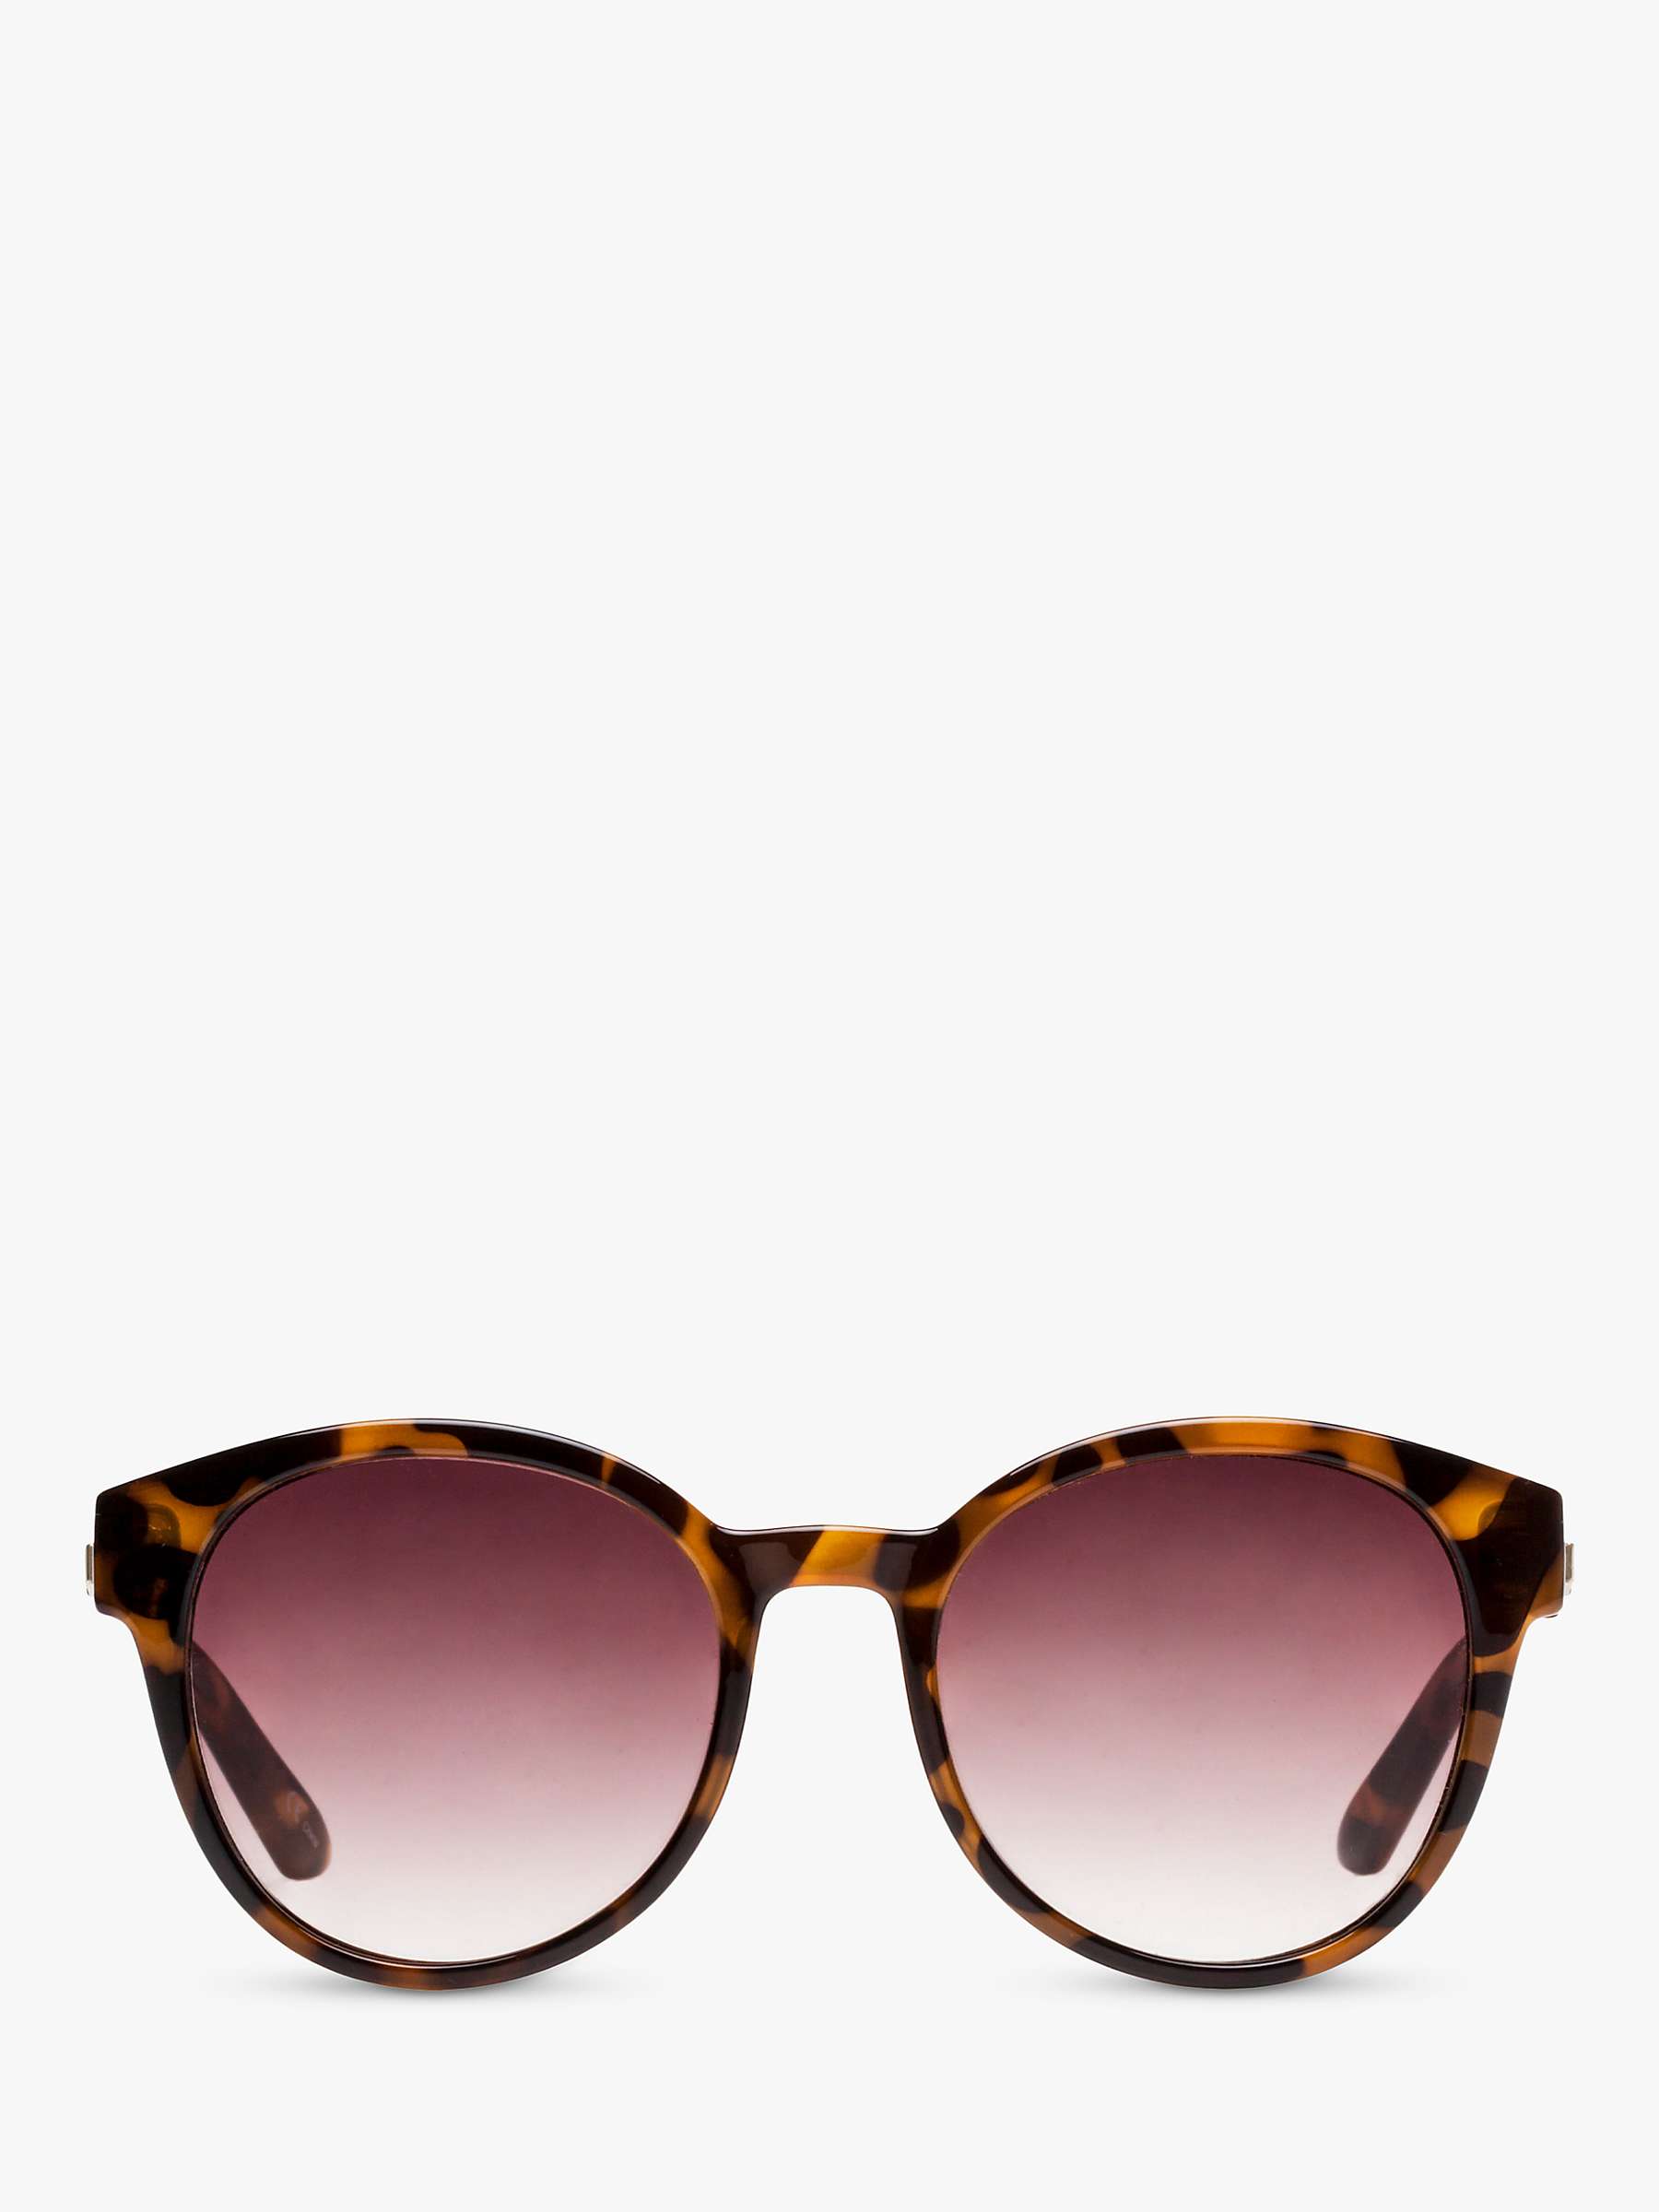 Buy Le Specs L5000183 Women's Paramount Round Sunglasses, Tortoise/Brown Gradient Online at johnlewis.com